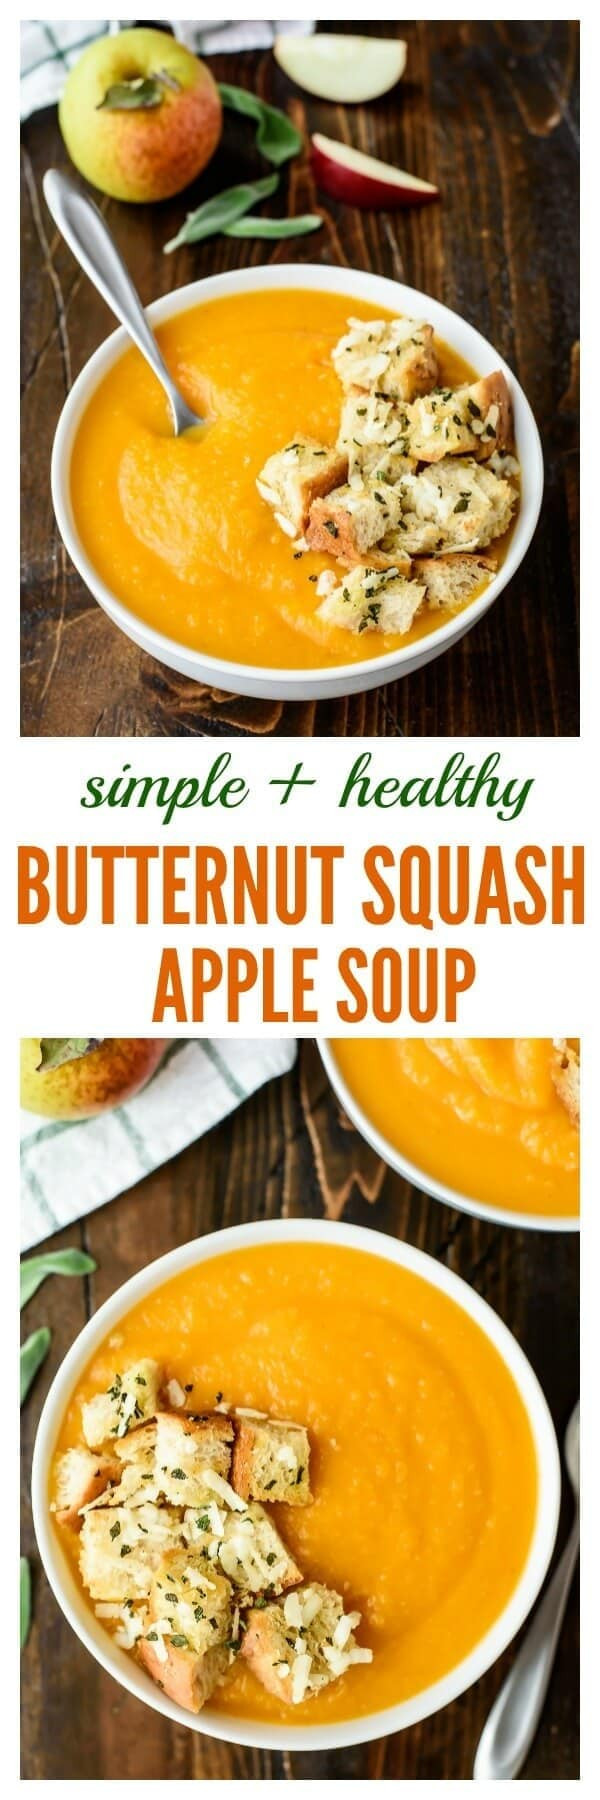 Healthy Butternut Squash Soup Recipe
 Butternut Squash Apple Soup